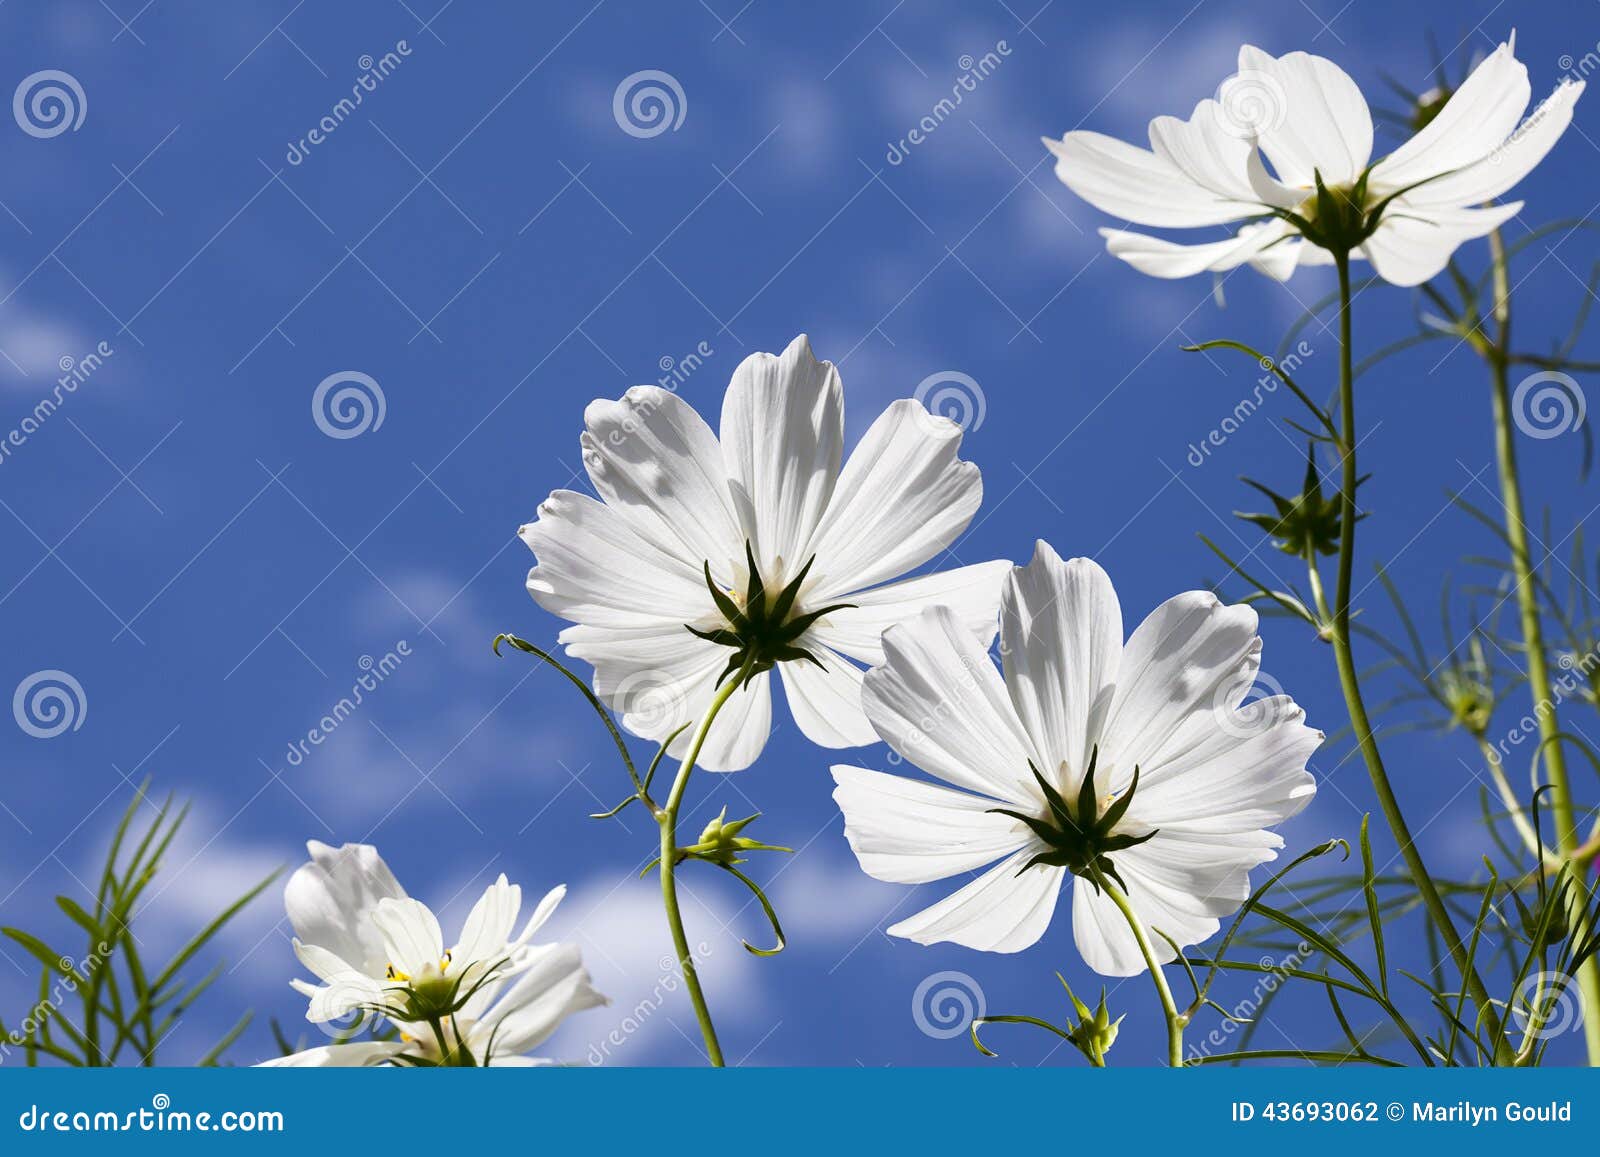 white cosmos flowers blue sky